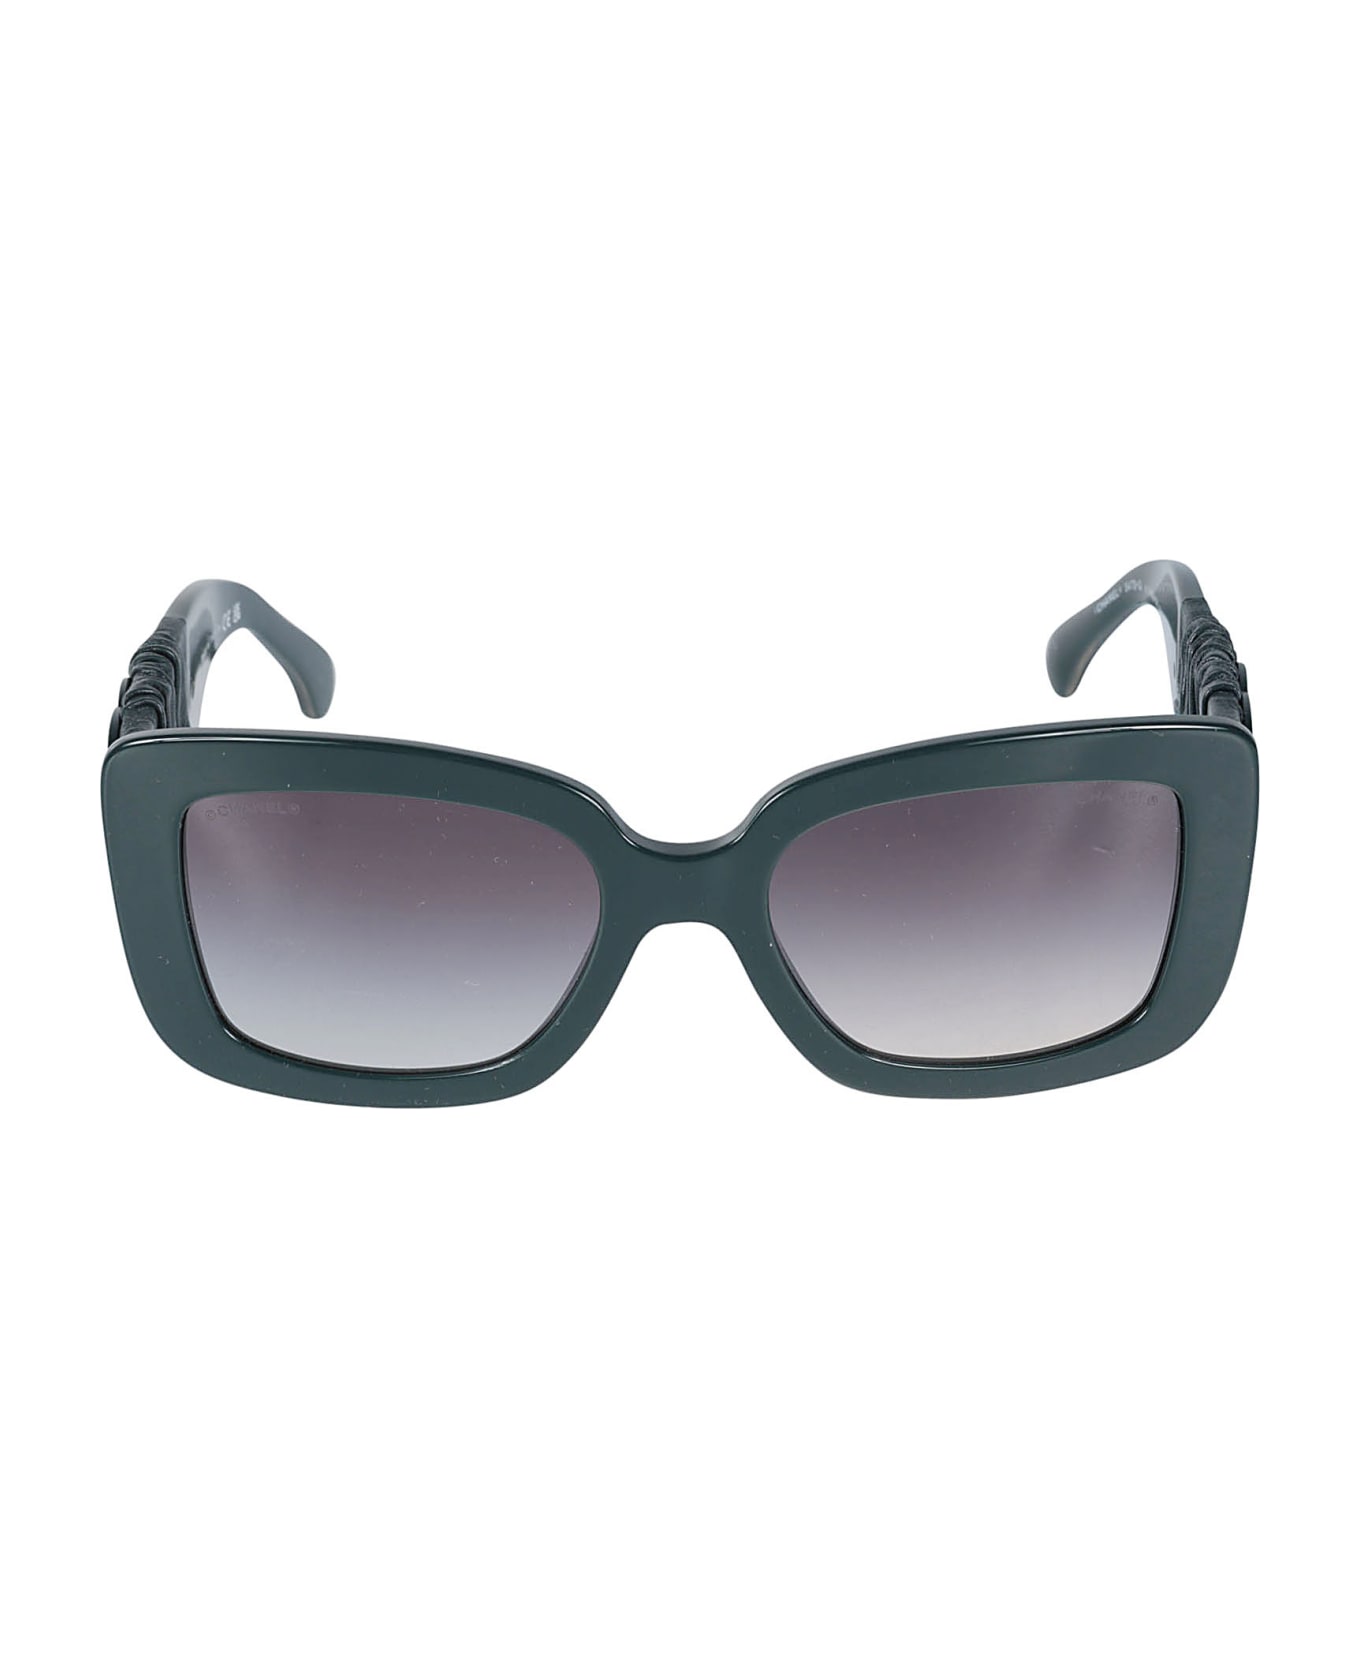 Chanel Square Frame Sunglasses - 1459s6